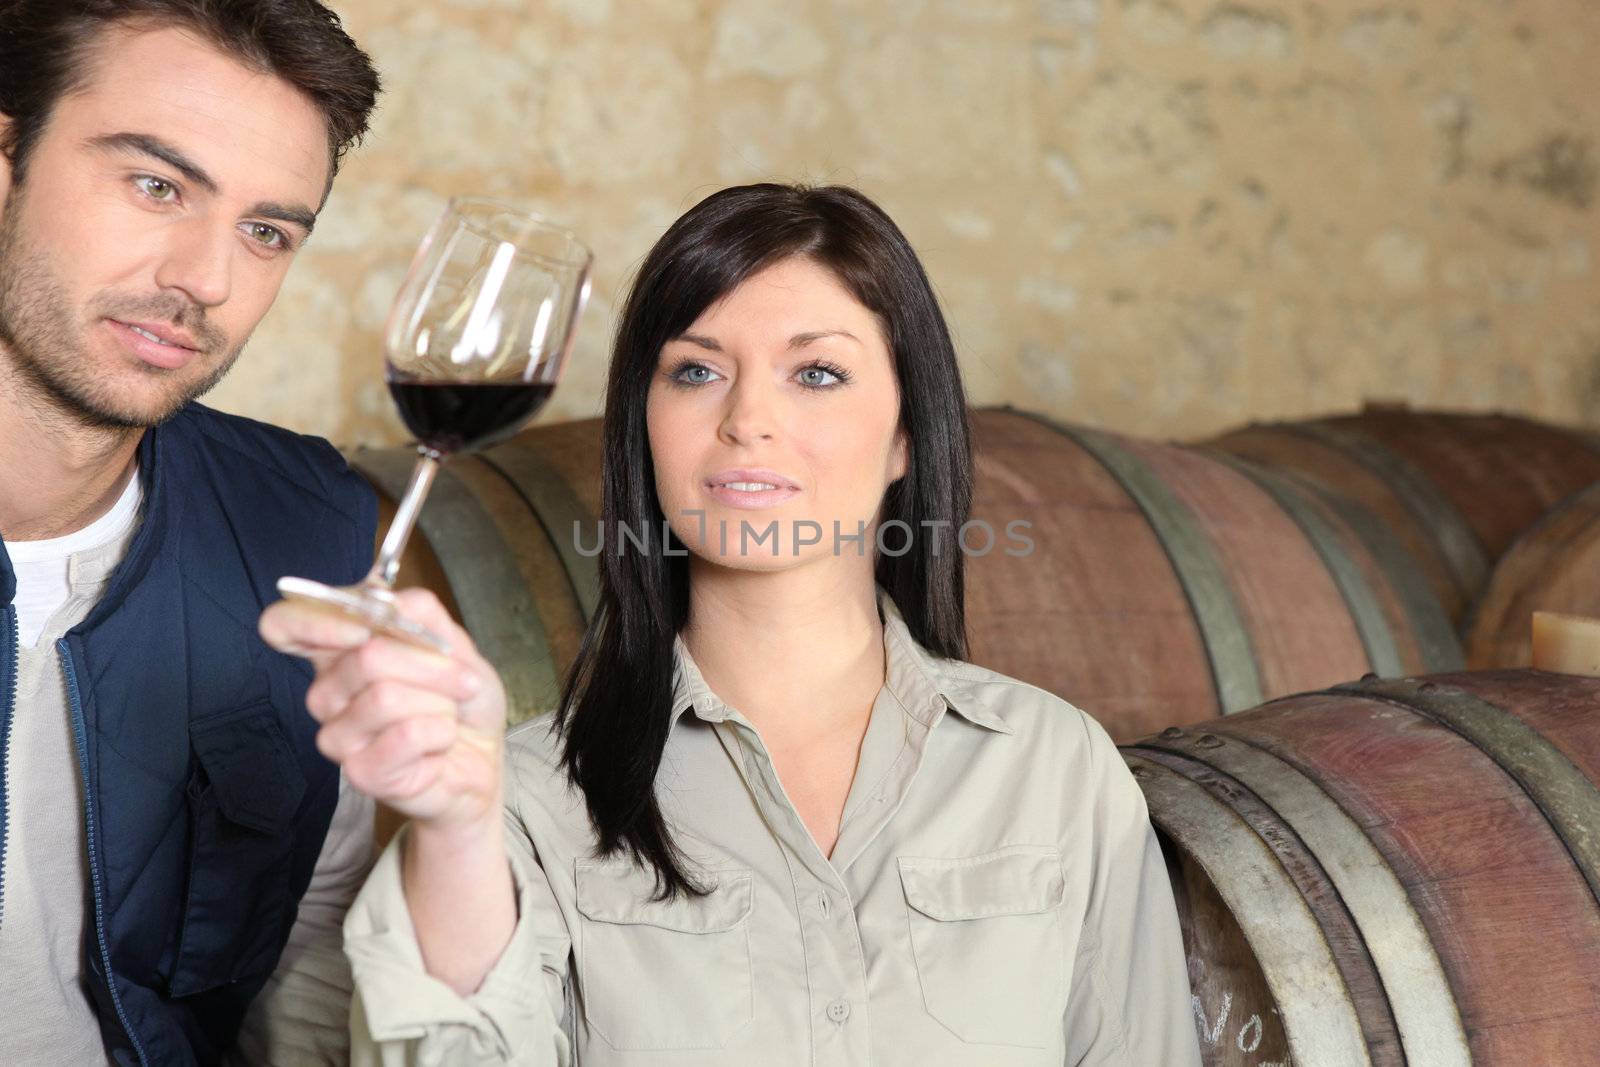 Couple in a cellar tasting wine Dubroca_Joffrey_140410;Bounie_Audrey_140410 by phovoir